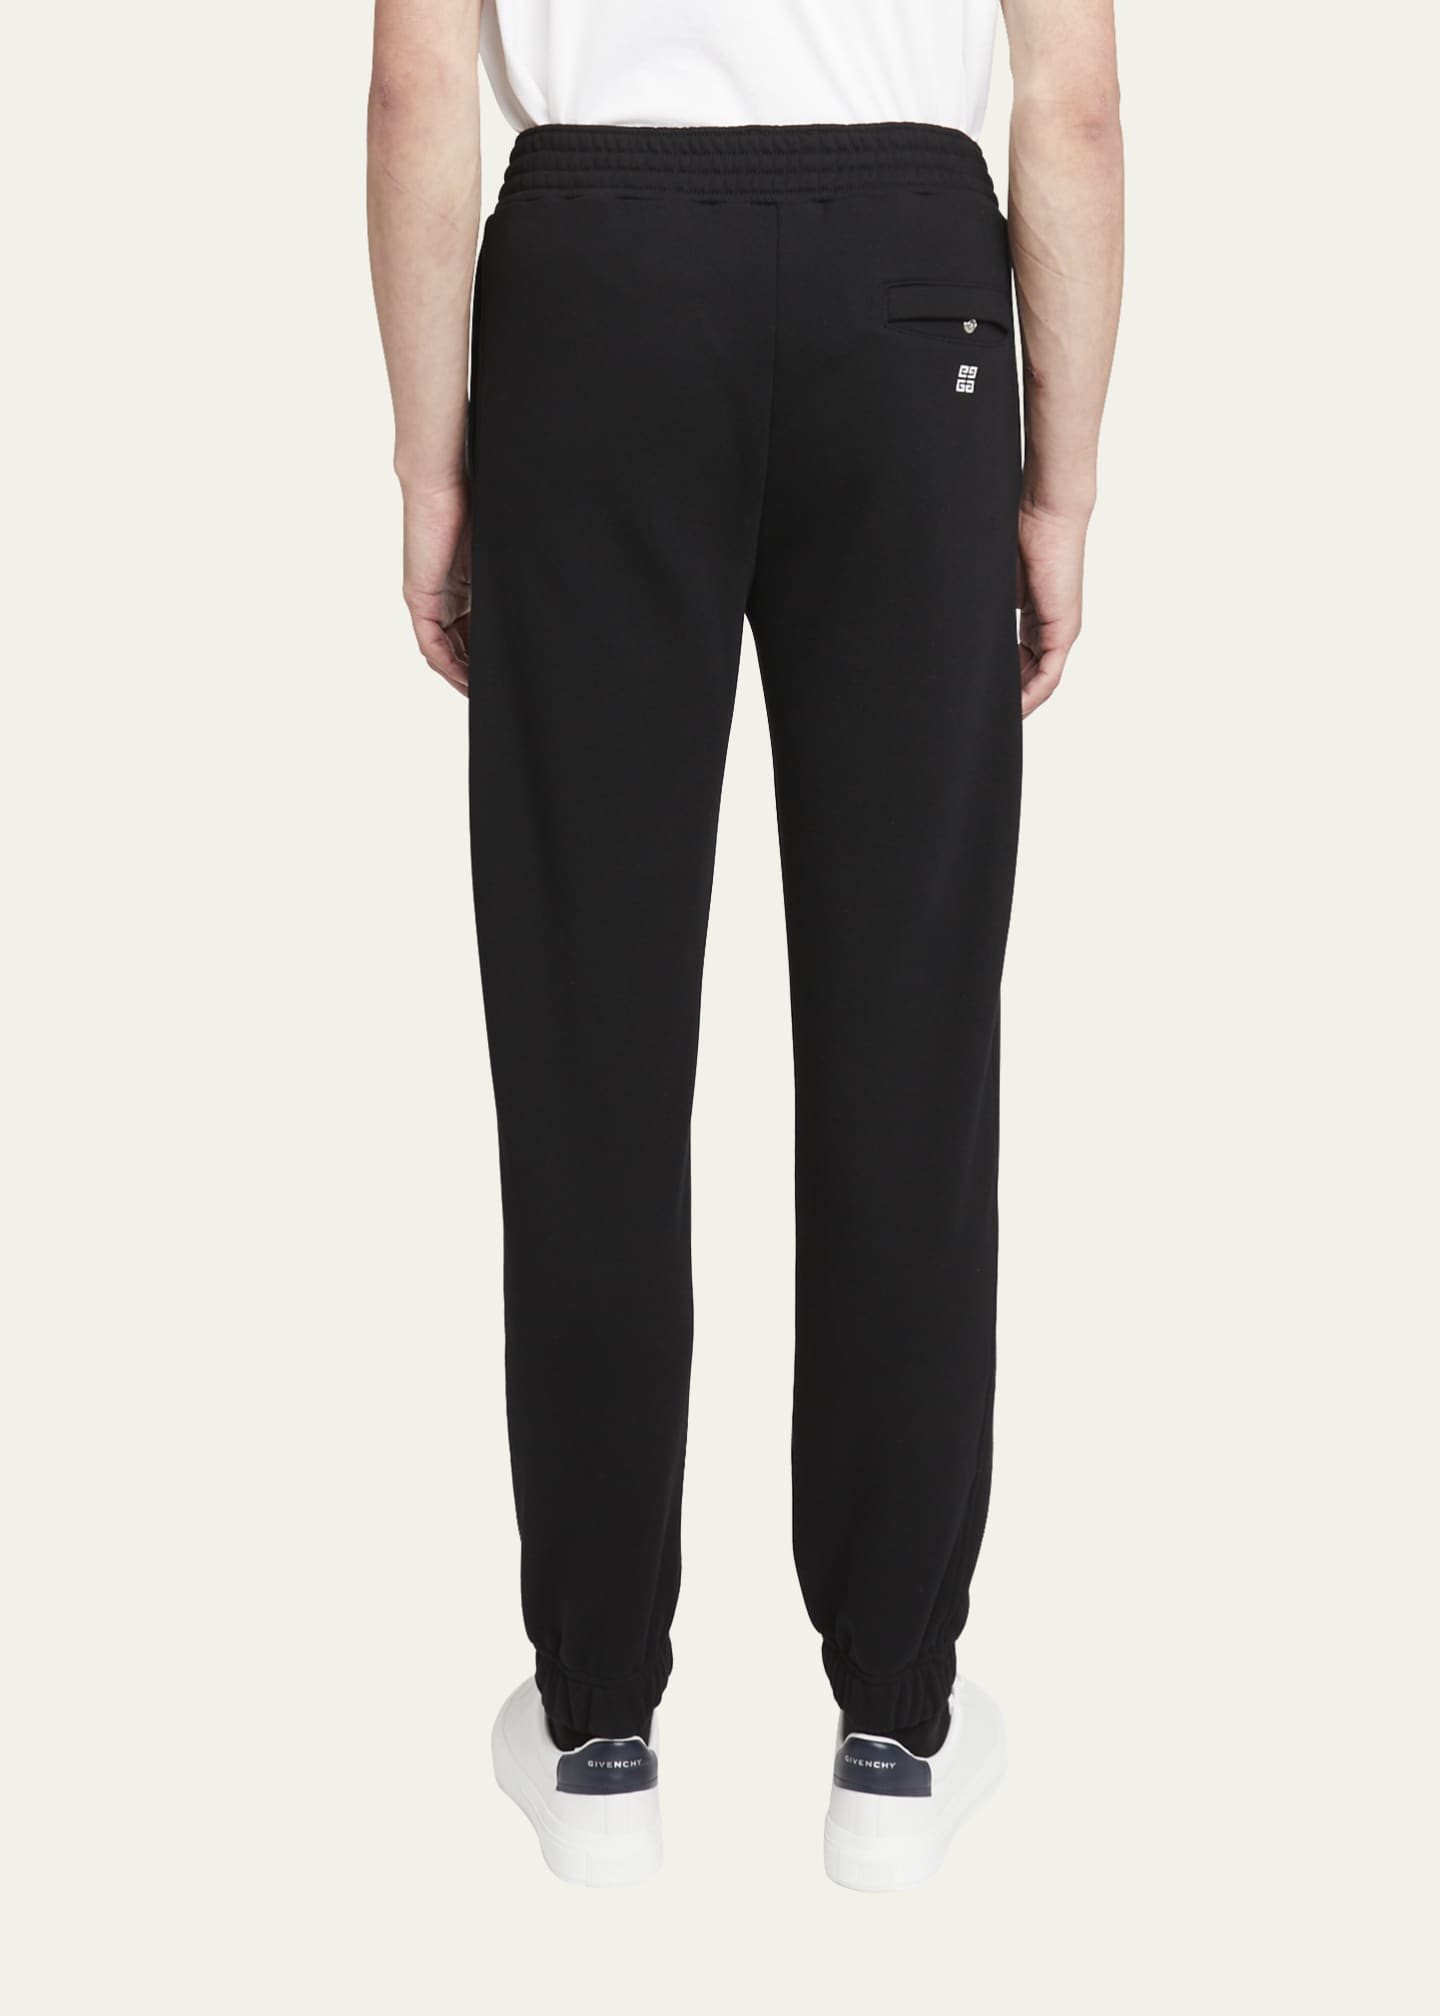 Givenchy Logo Printed Elastic Waist Jogging Pants – Cettire